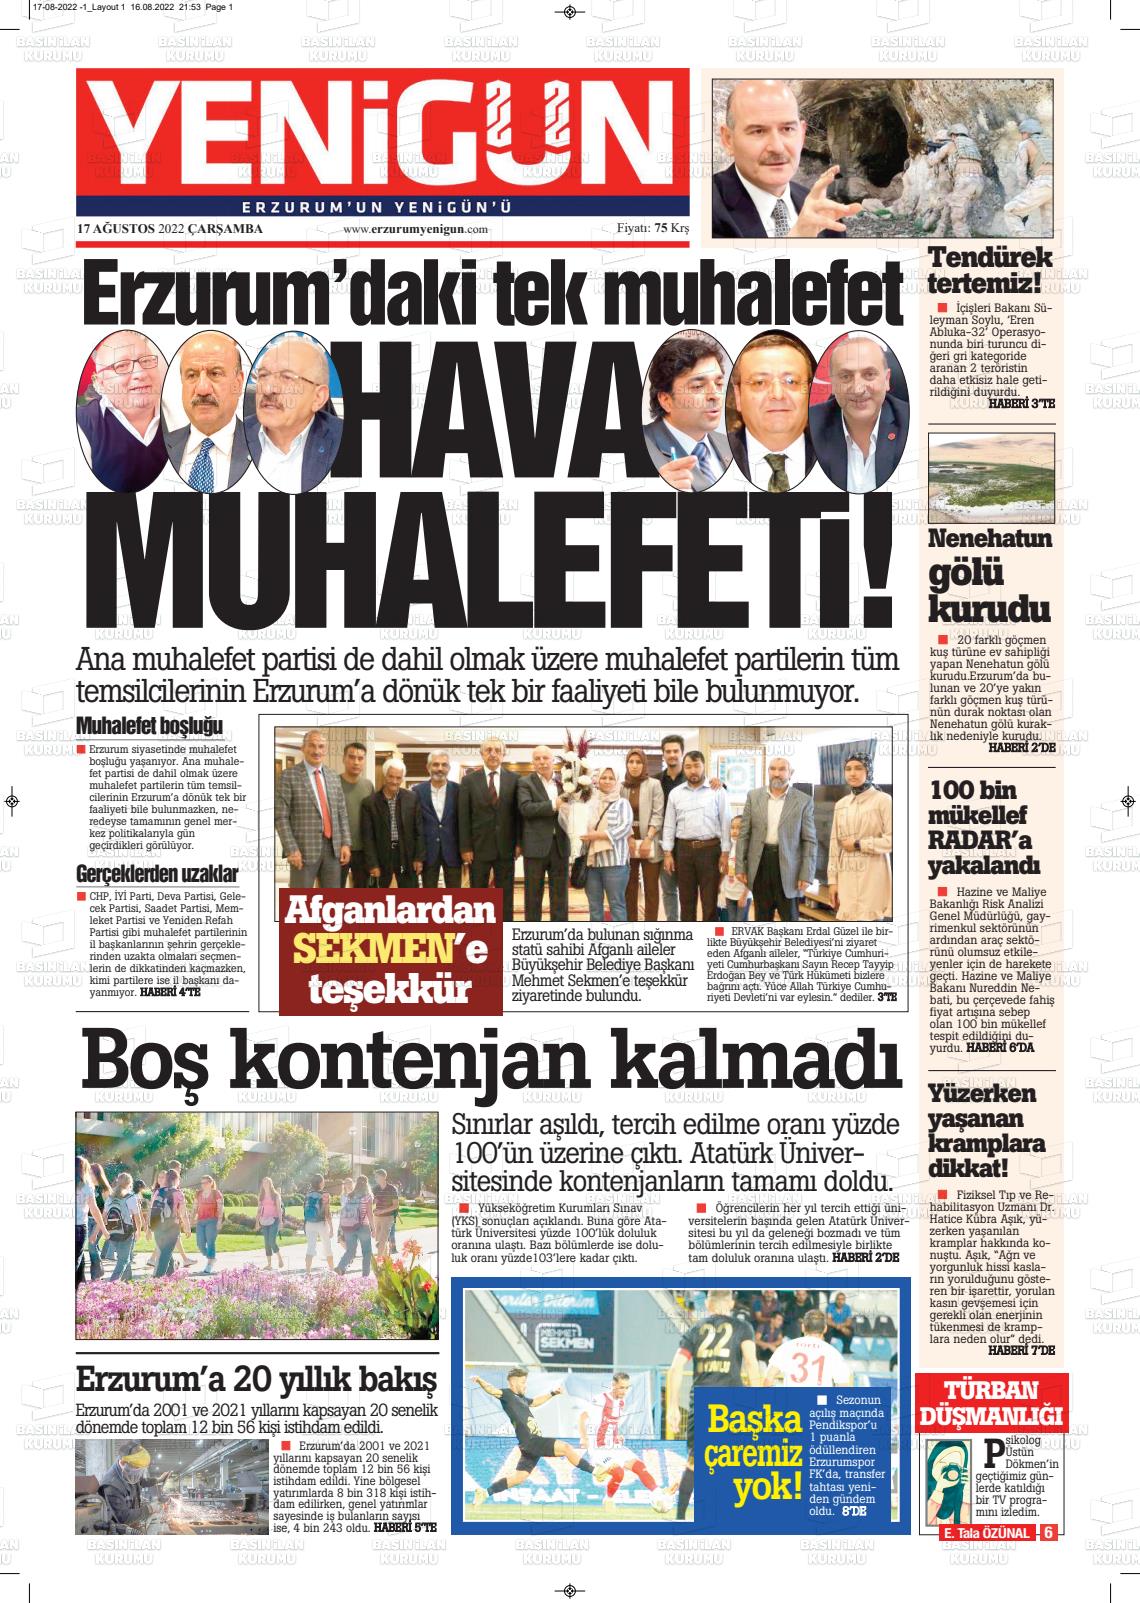 17 Ağustos 2022 Erzurum Yenigün Gazete Manşeti